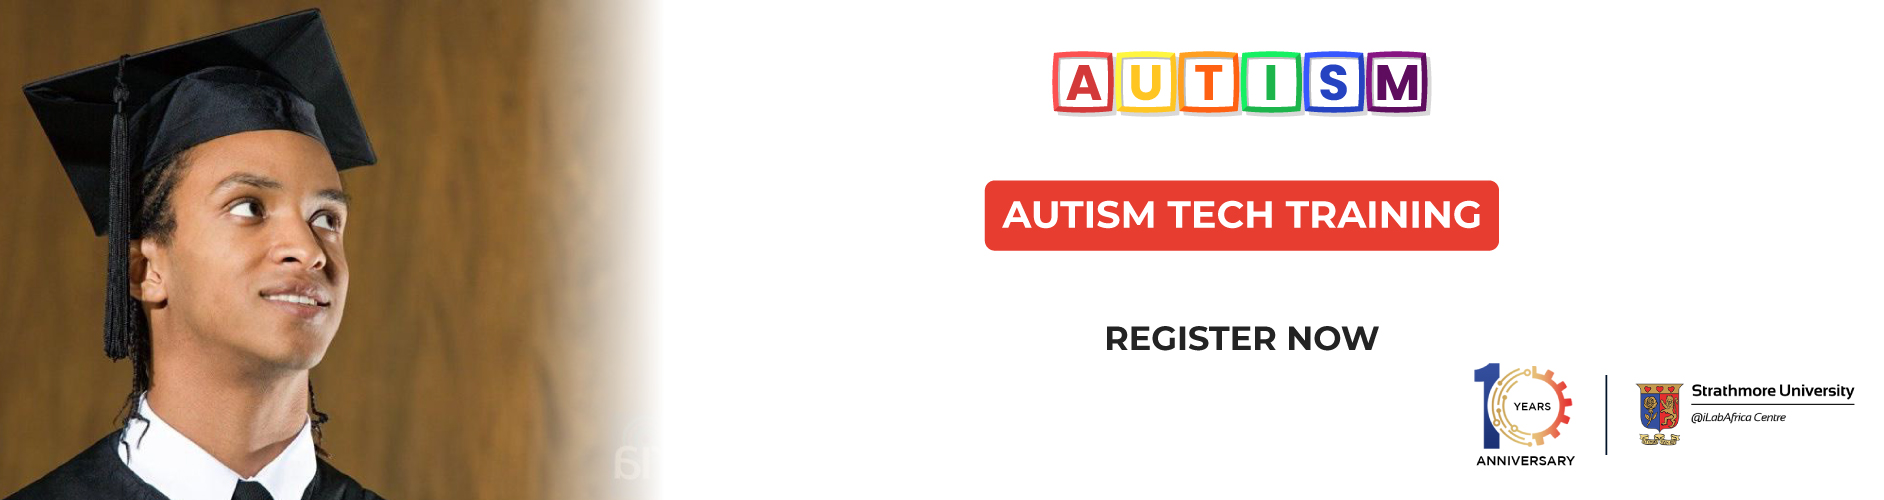 Autism-Banner (3)